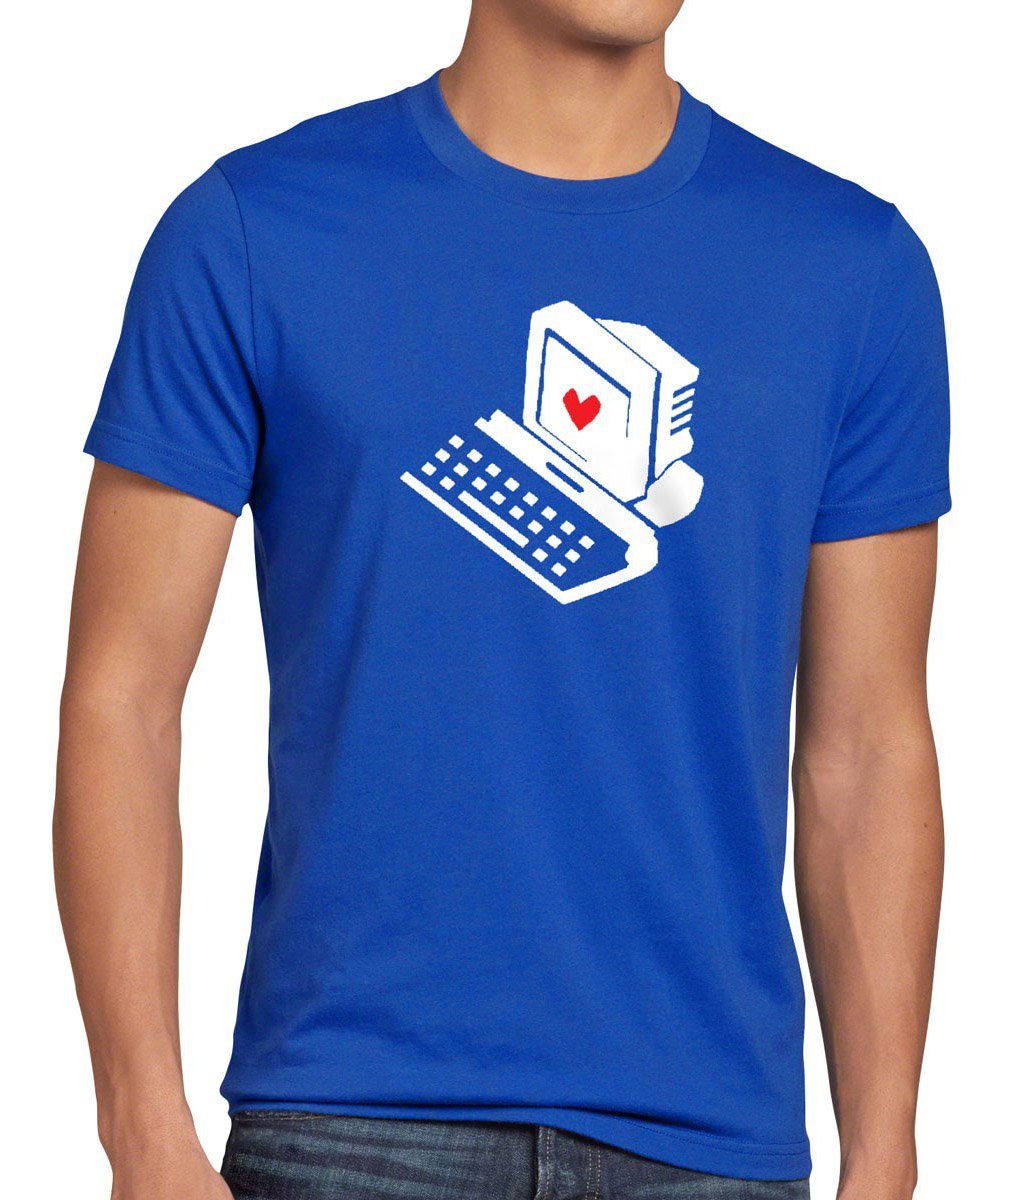 style3 Print-Shirt Herren tbbt Bang Computer Sheldon theory blau PC Retro Love Herz T-Shirt Big Mac Nerd